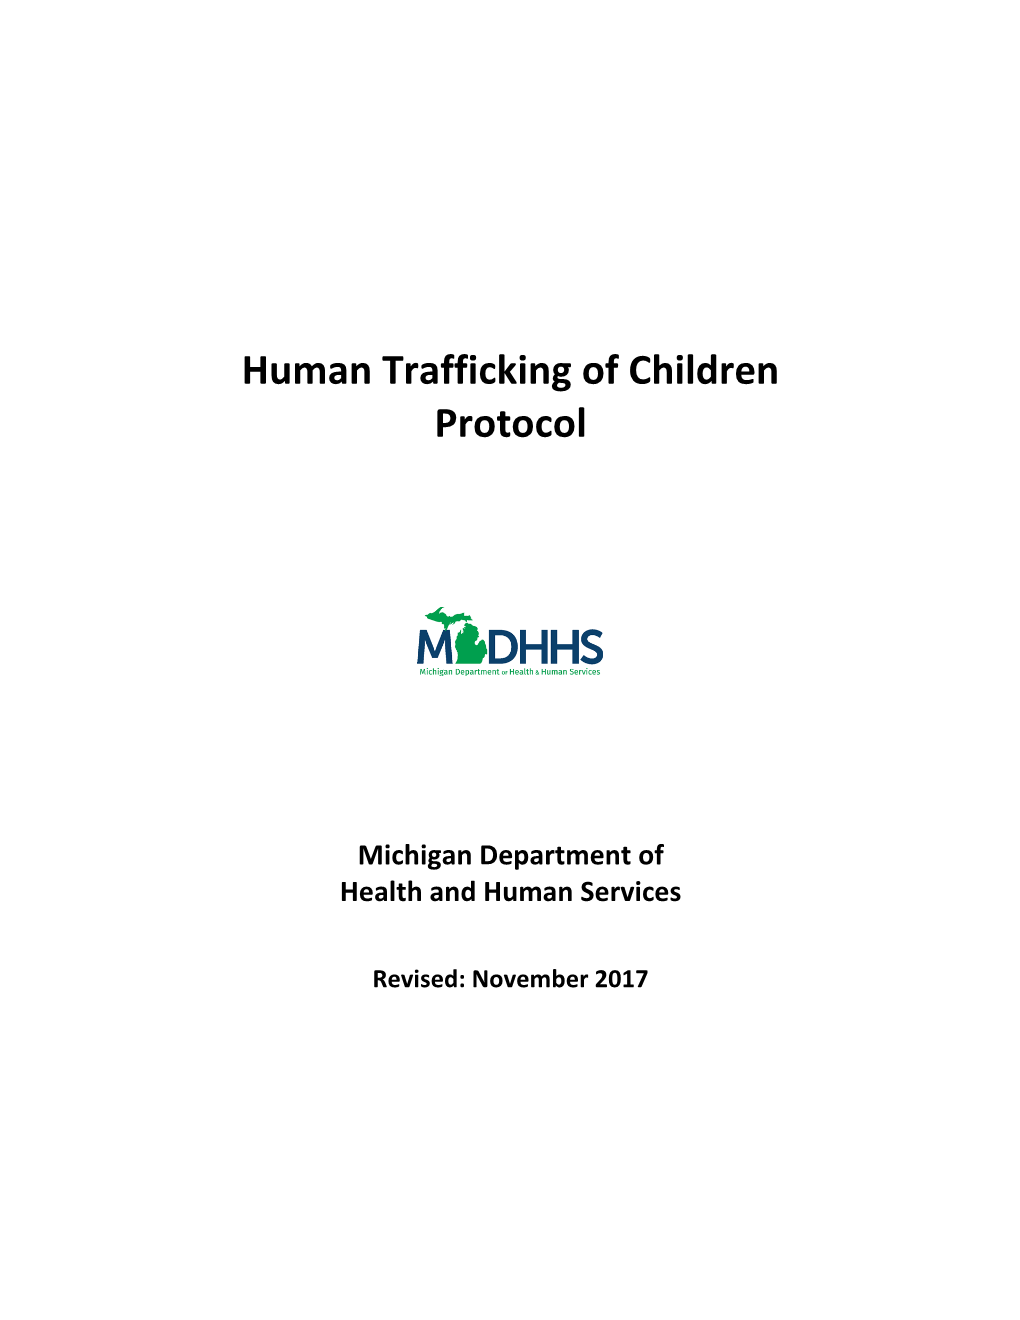 Human Trafficking of Children Protocol